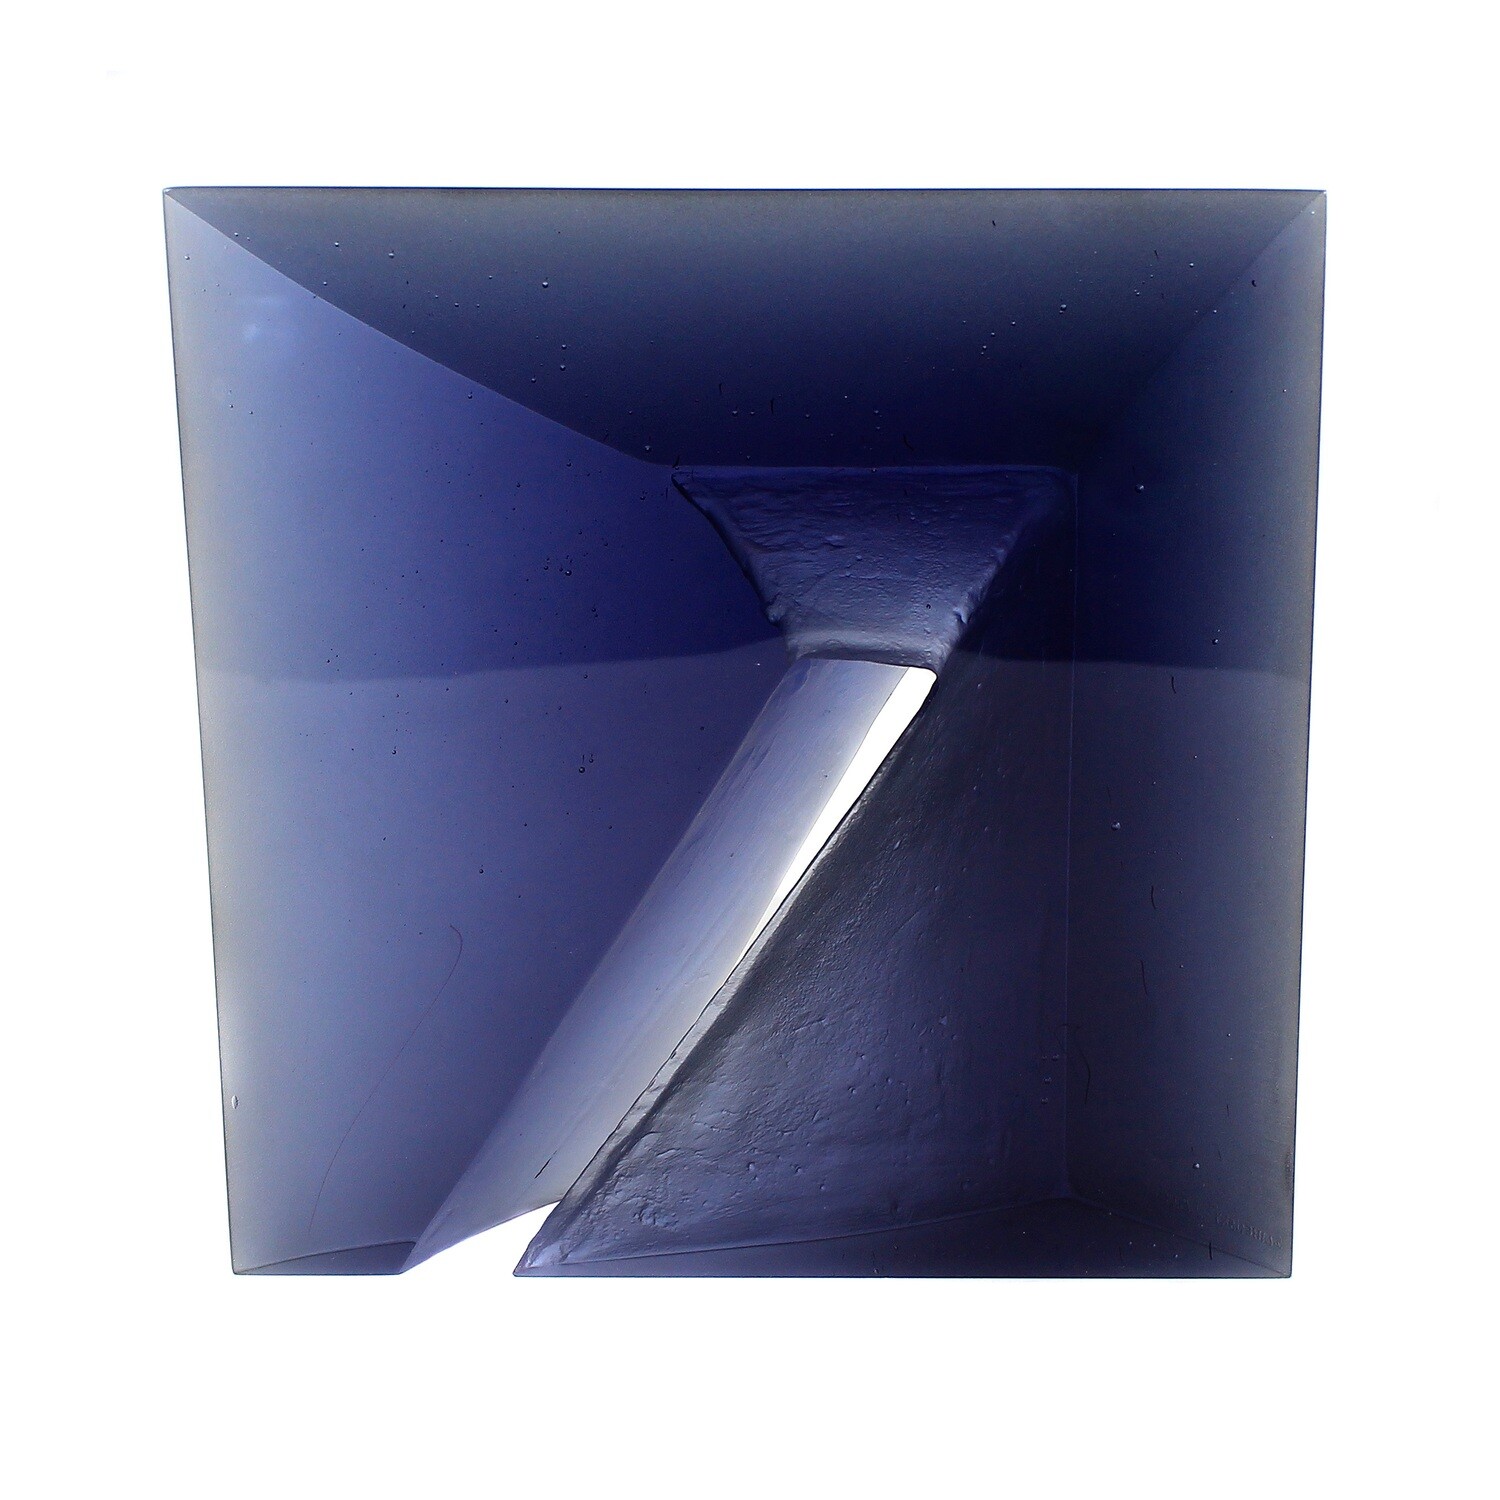 Glas Skulptur " Diagonale " von Stanislav Libensky & Jaroslava Brychtova v. 1989